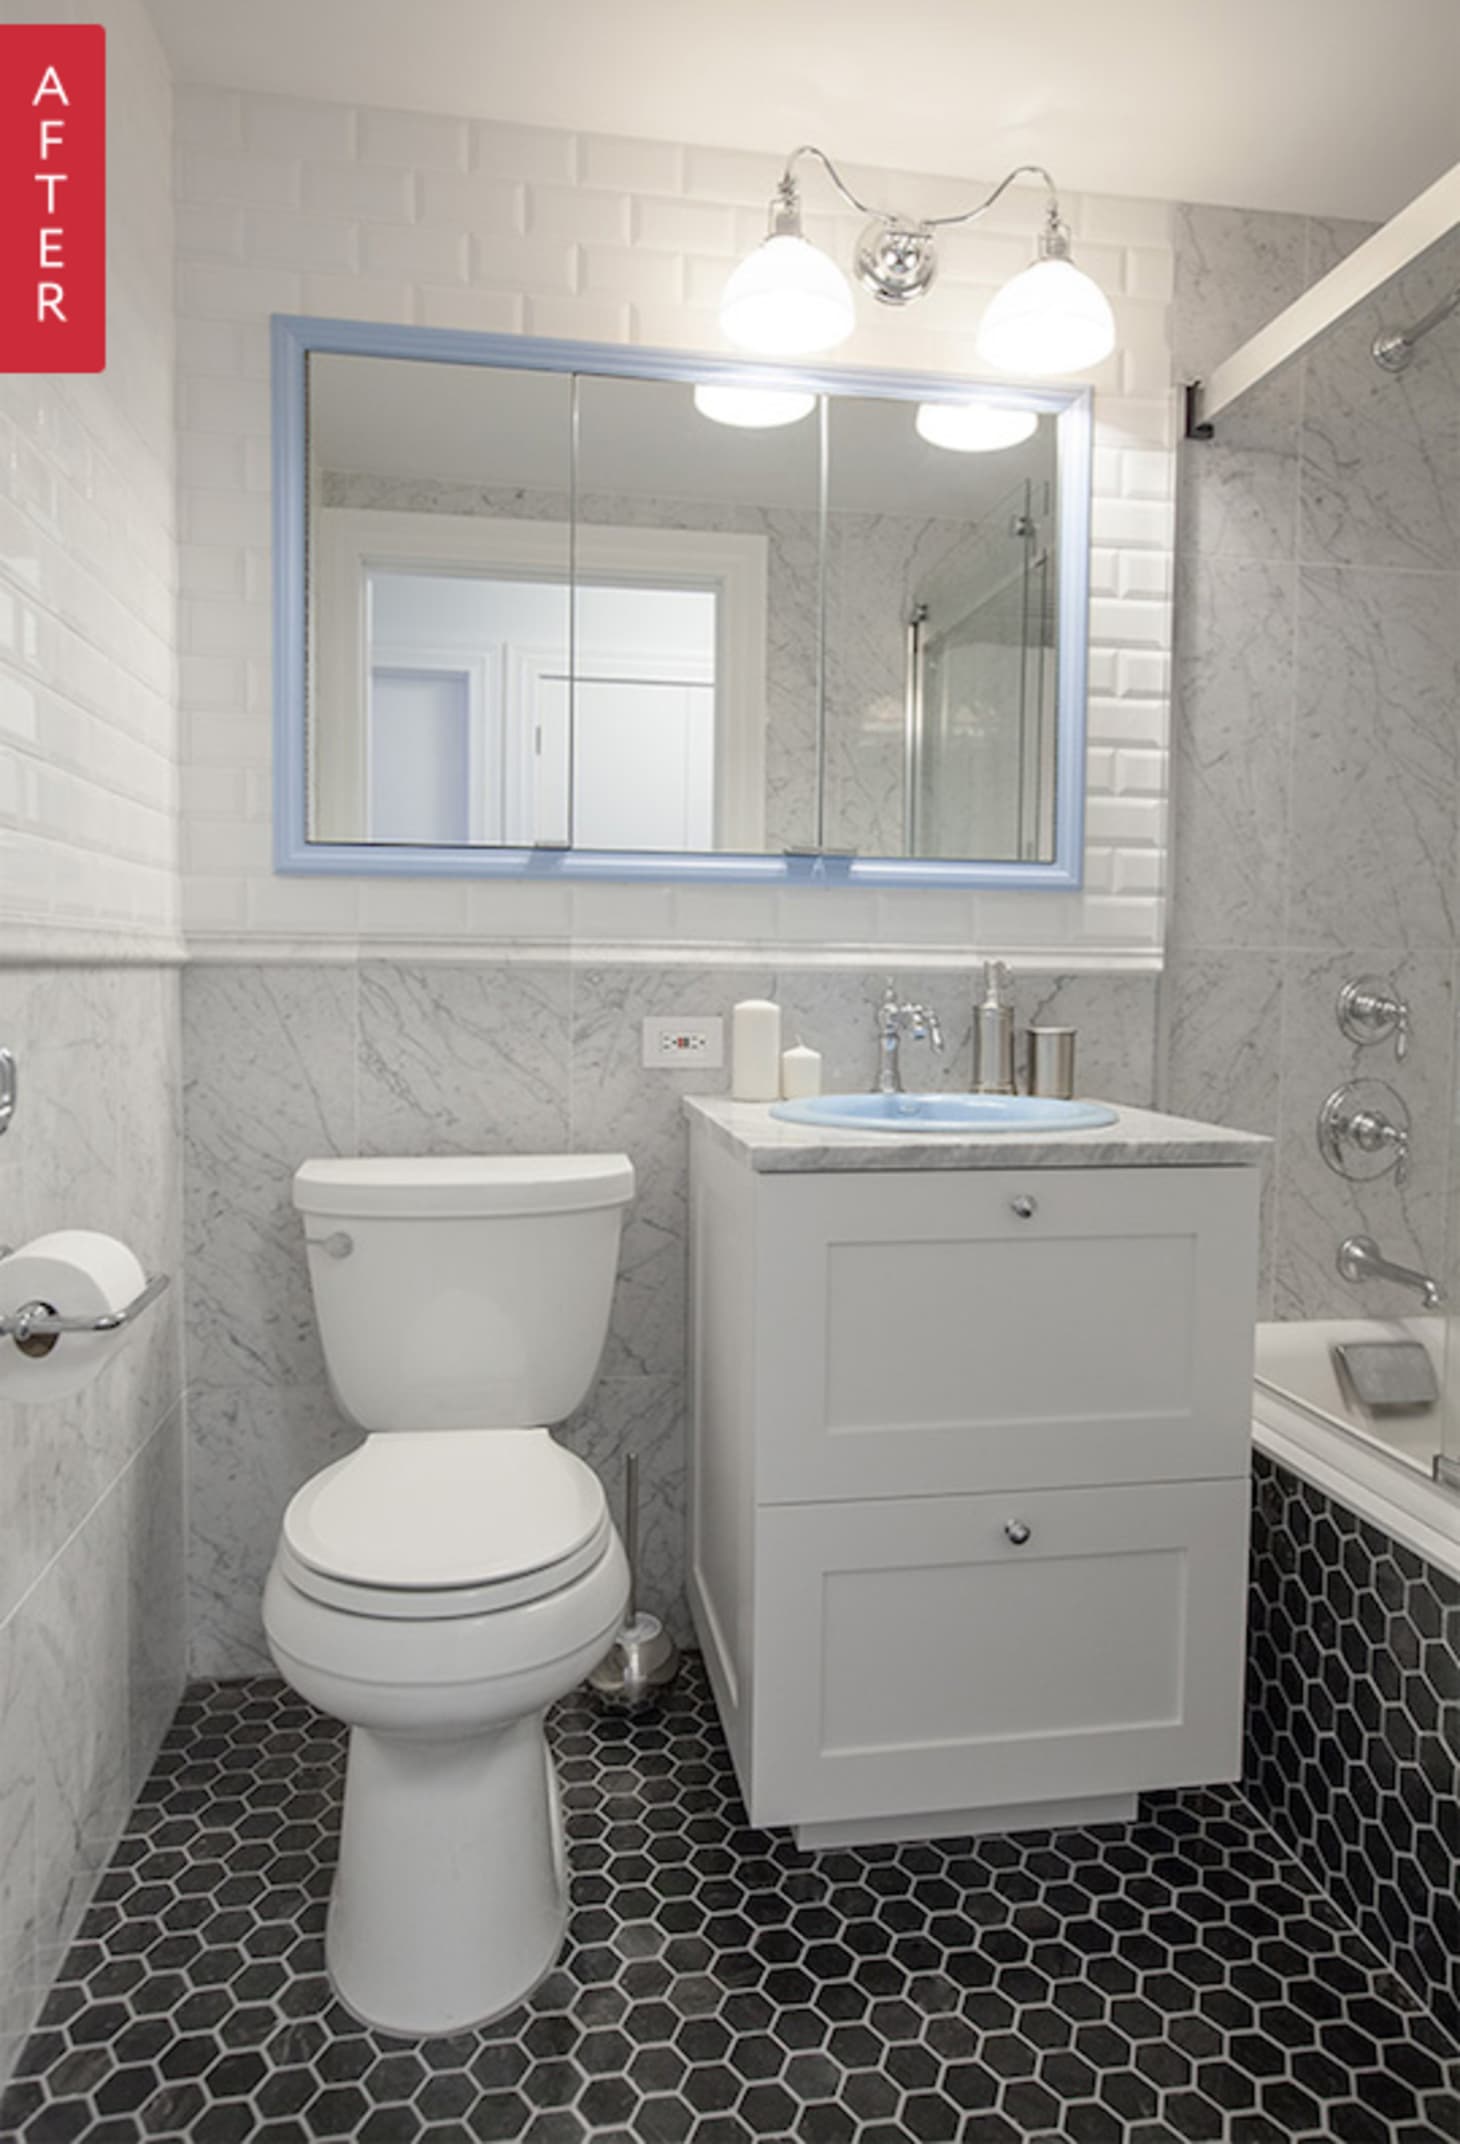 NYC Condo Bathroom Remodeling: Eek to Sleek - At%2Farchive%2F451e01174fcc34D89a9907fbb7c79fbD28Dac663